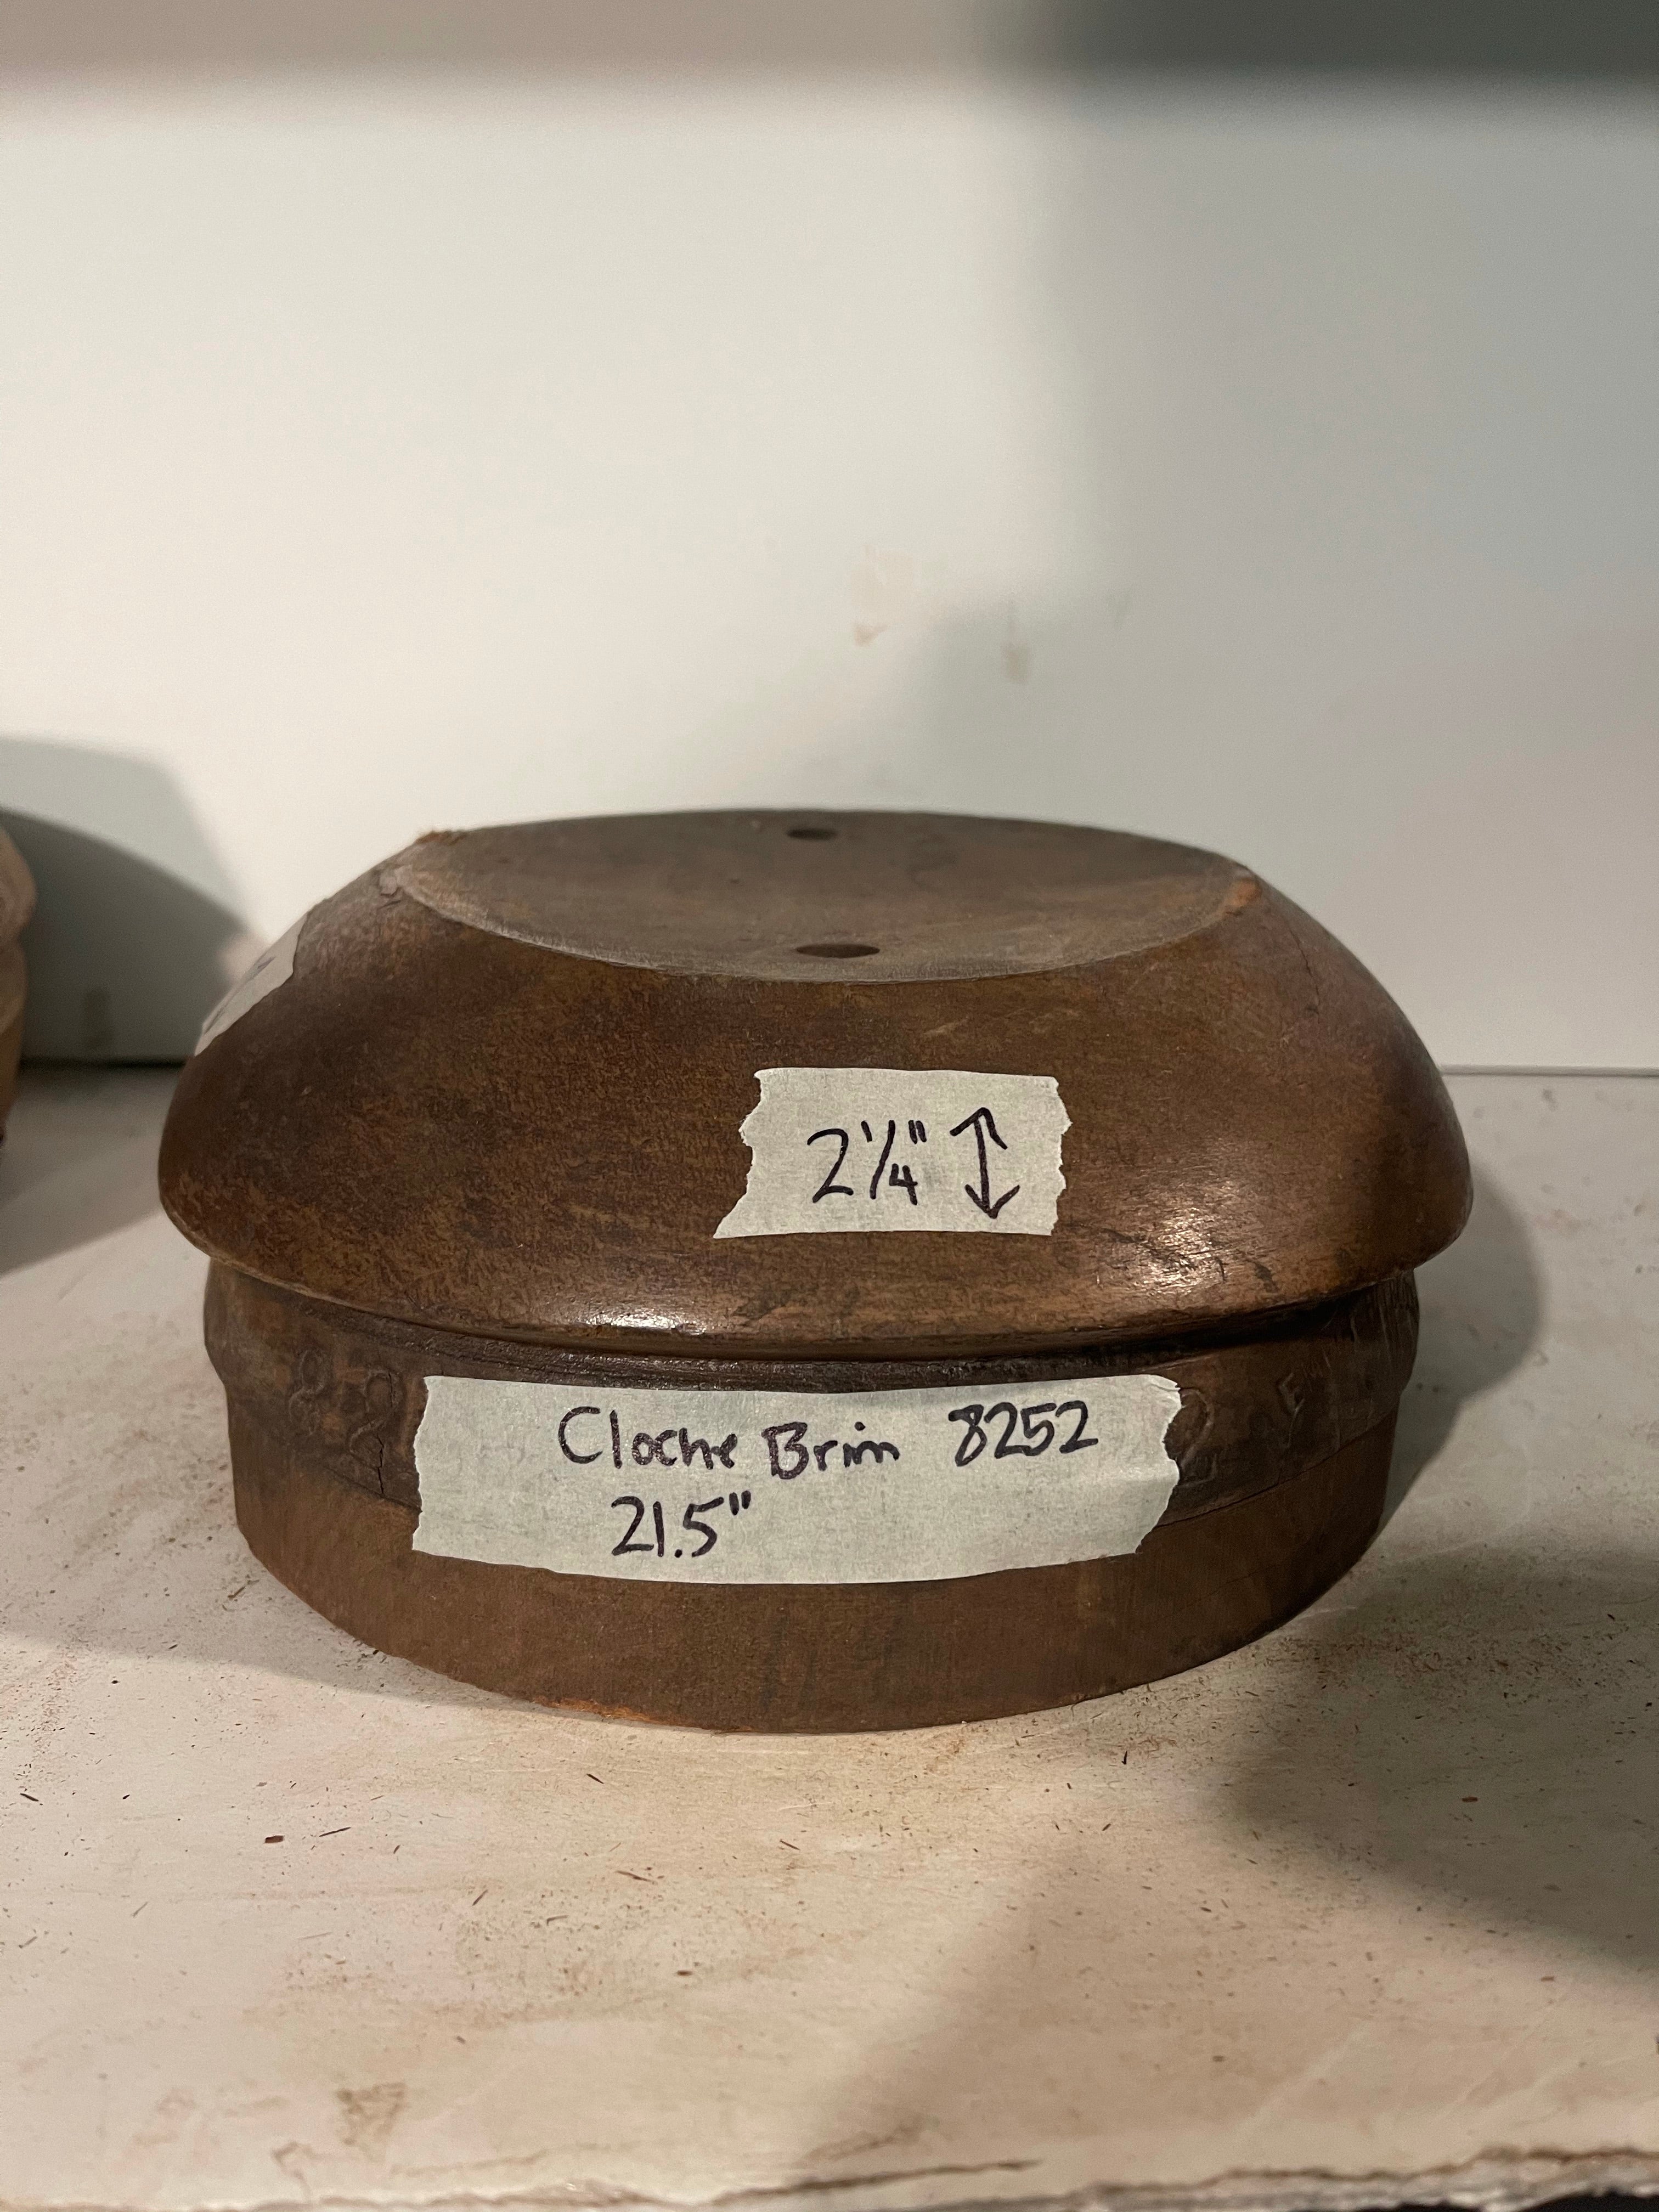 Cloche Hat Brim 8252, Headsize 21.5”